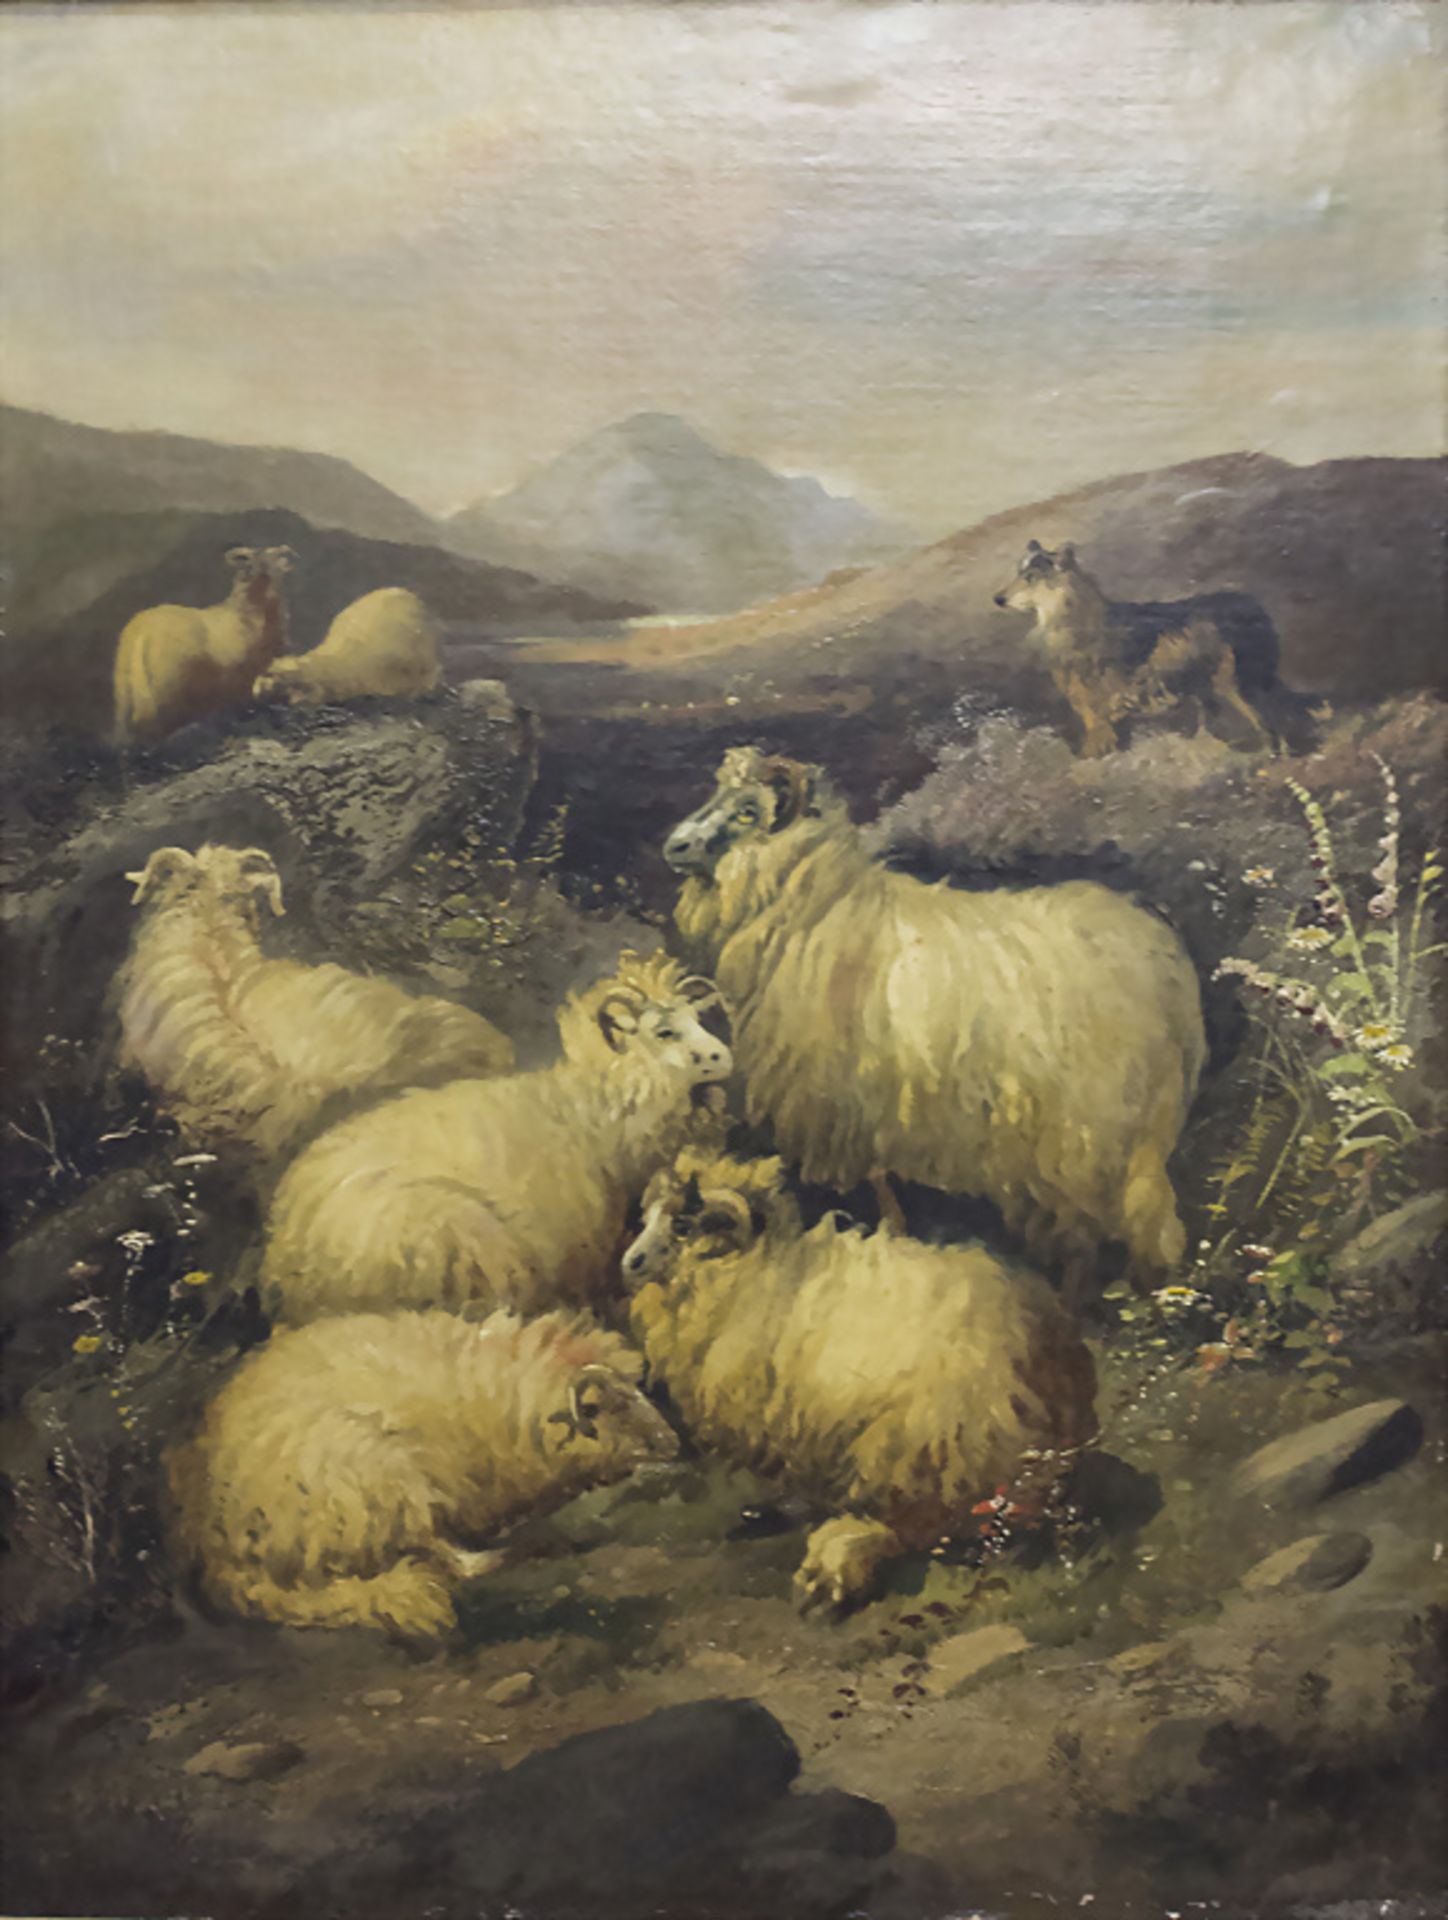 Künstler des 18./19. Jh., 'Widderherde mit Hirtenhund' / 'Herd of rams with shepherd dog'